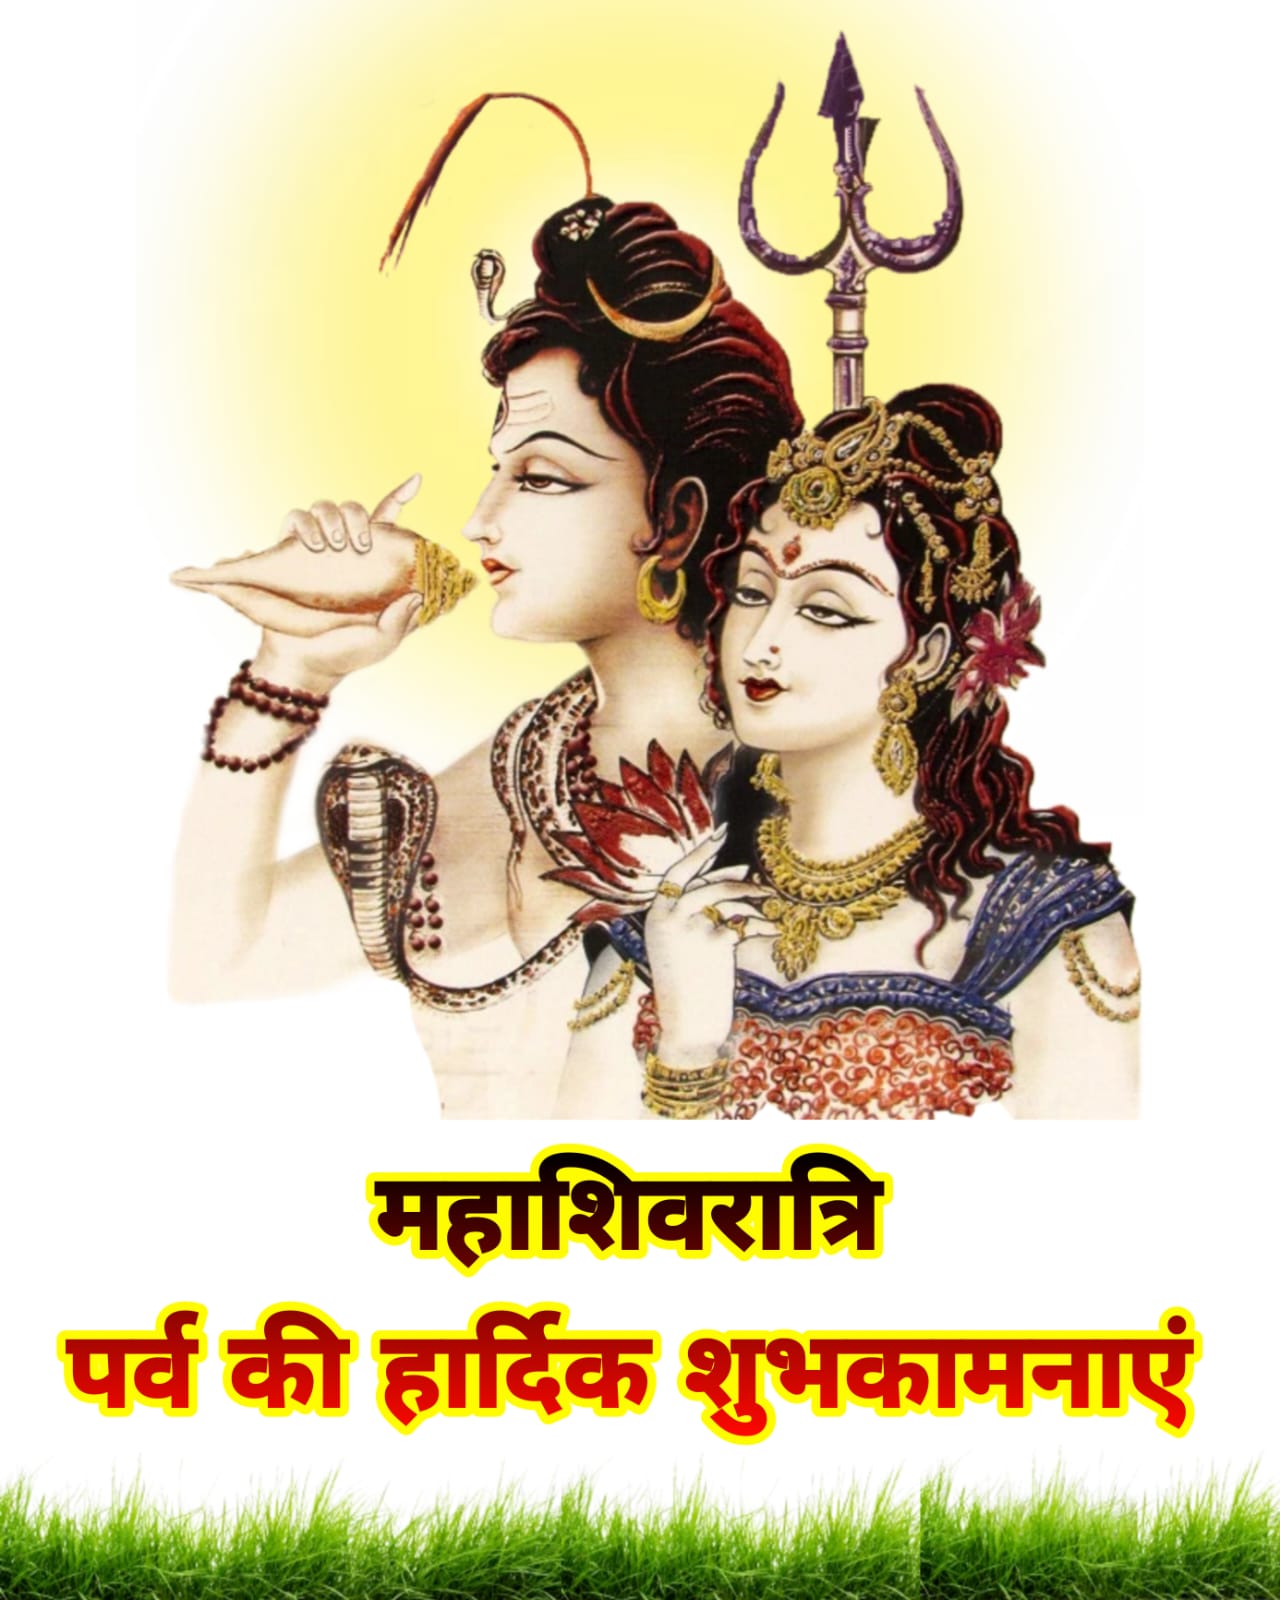 Mahashivratri ki Hardik Shubhkamnaye photo image | महाशिवरात्रि की हार्दिक शुभकामनाएं